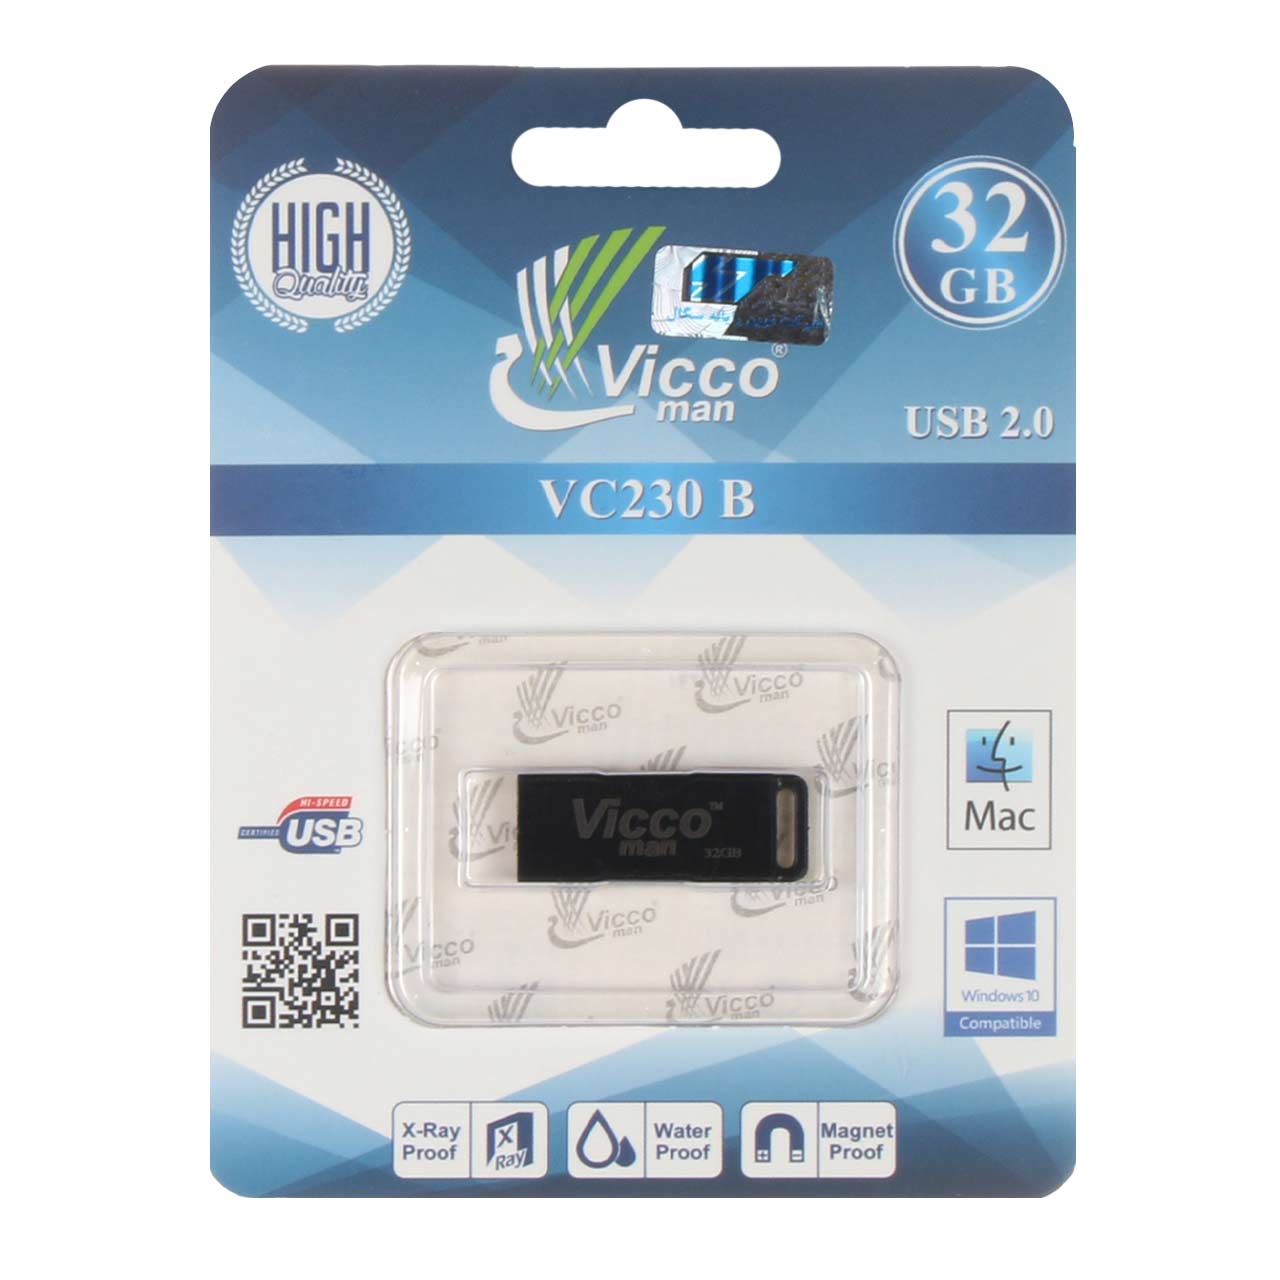 فلش مموری 32 گیگابایت ویکو من Vicco man VC230 B USB2.0 – مشکی